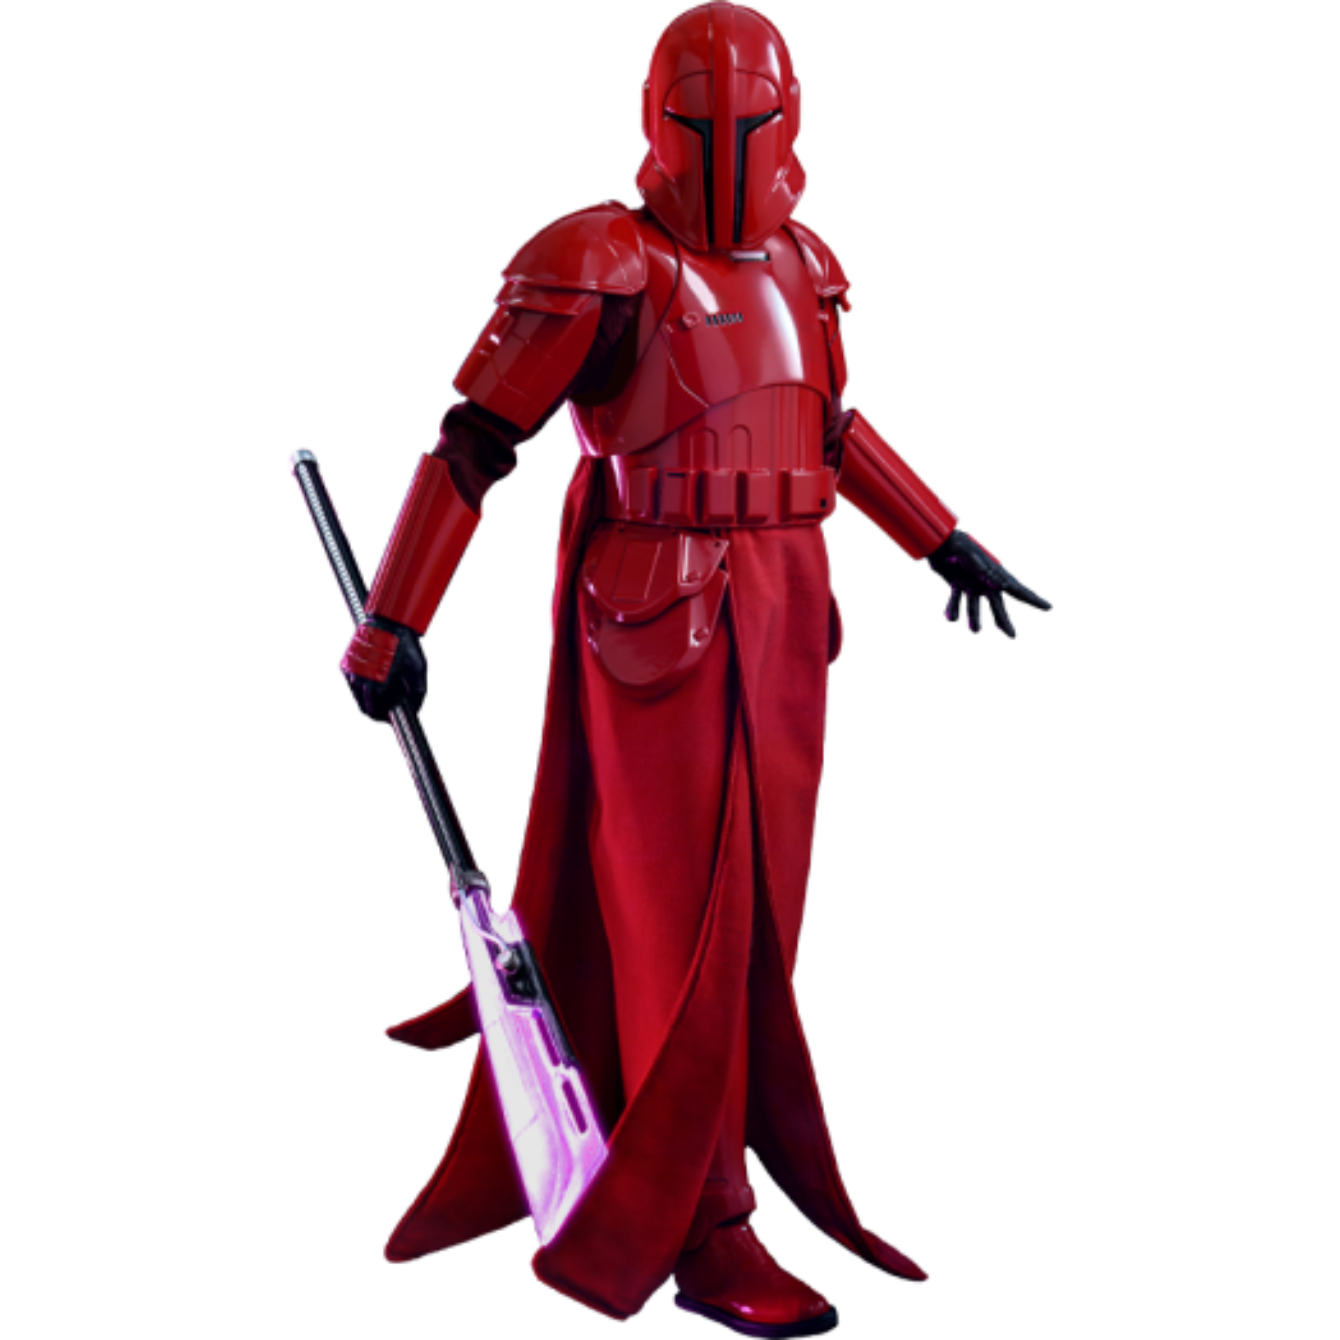 PRE-ORDER Imperial Praetorian Guard™ Sixth Scale Figure